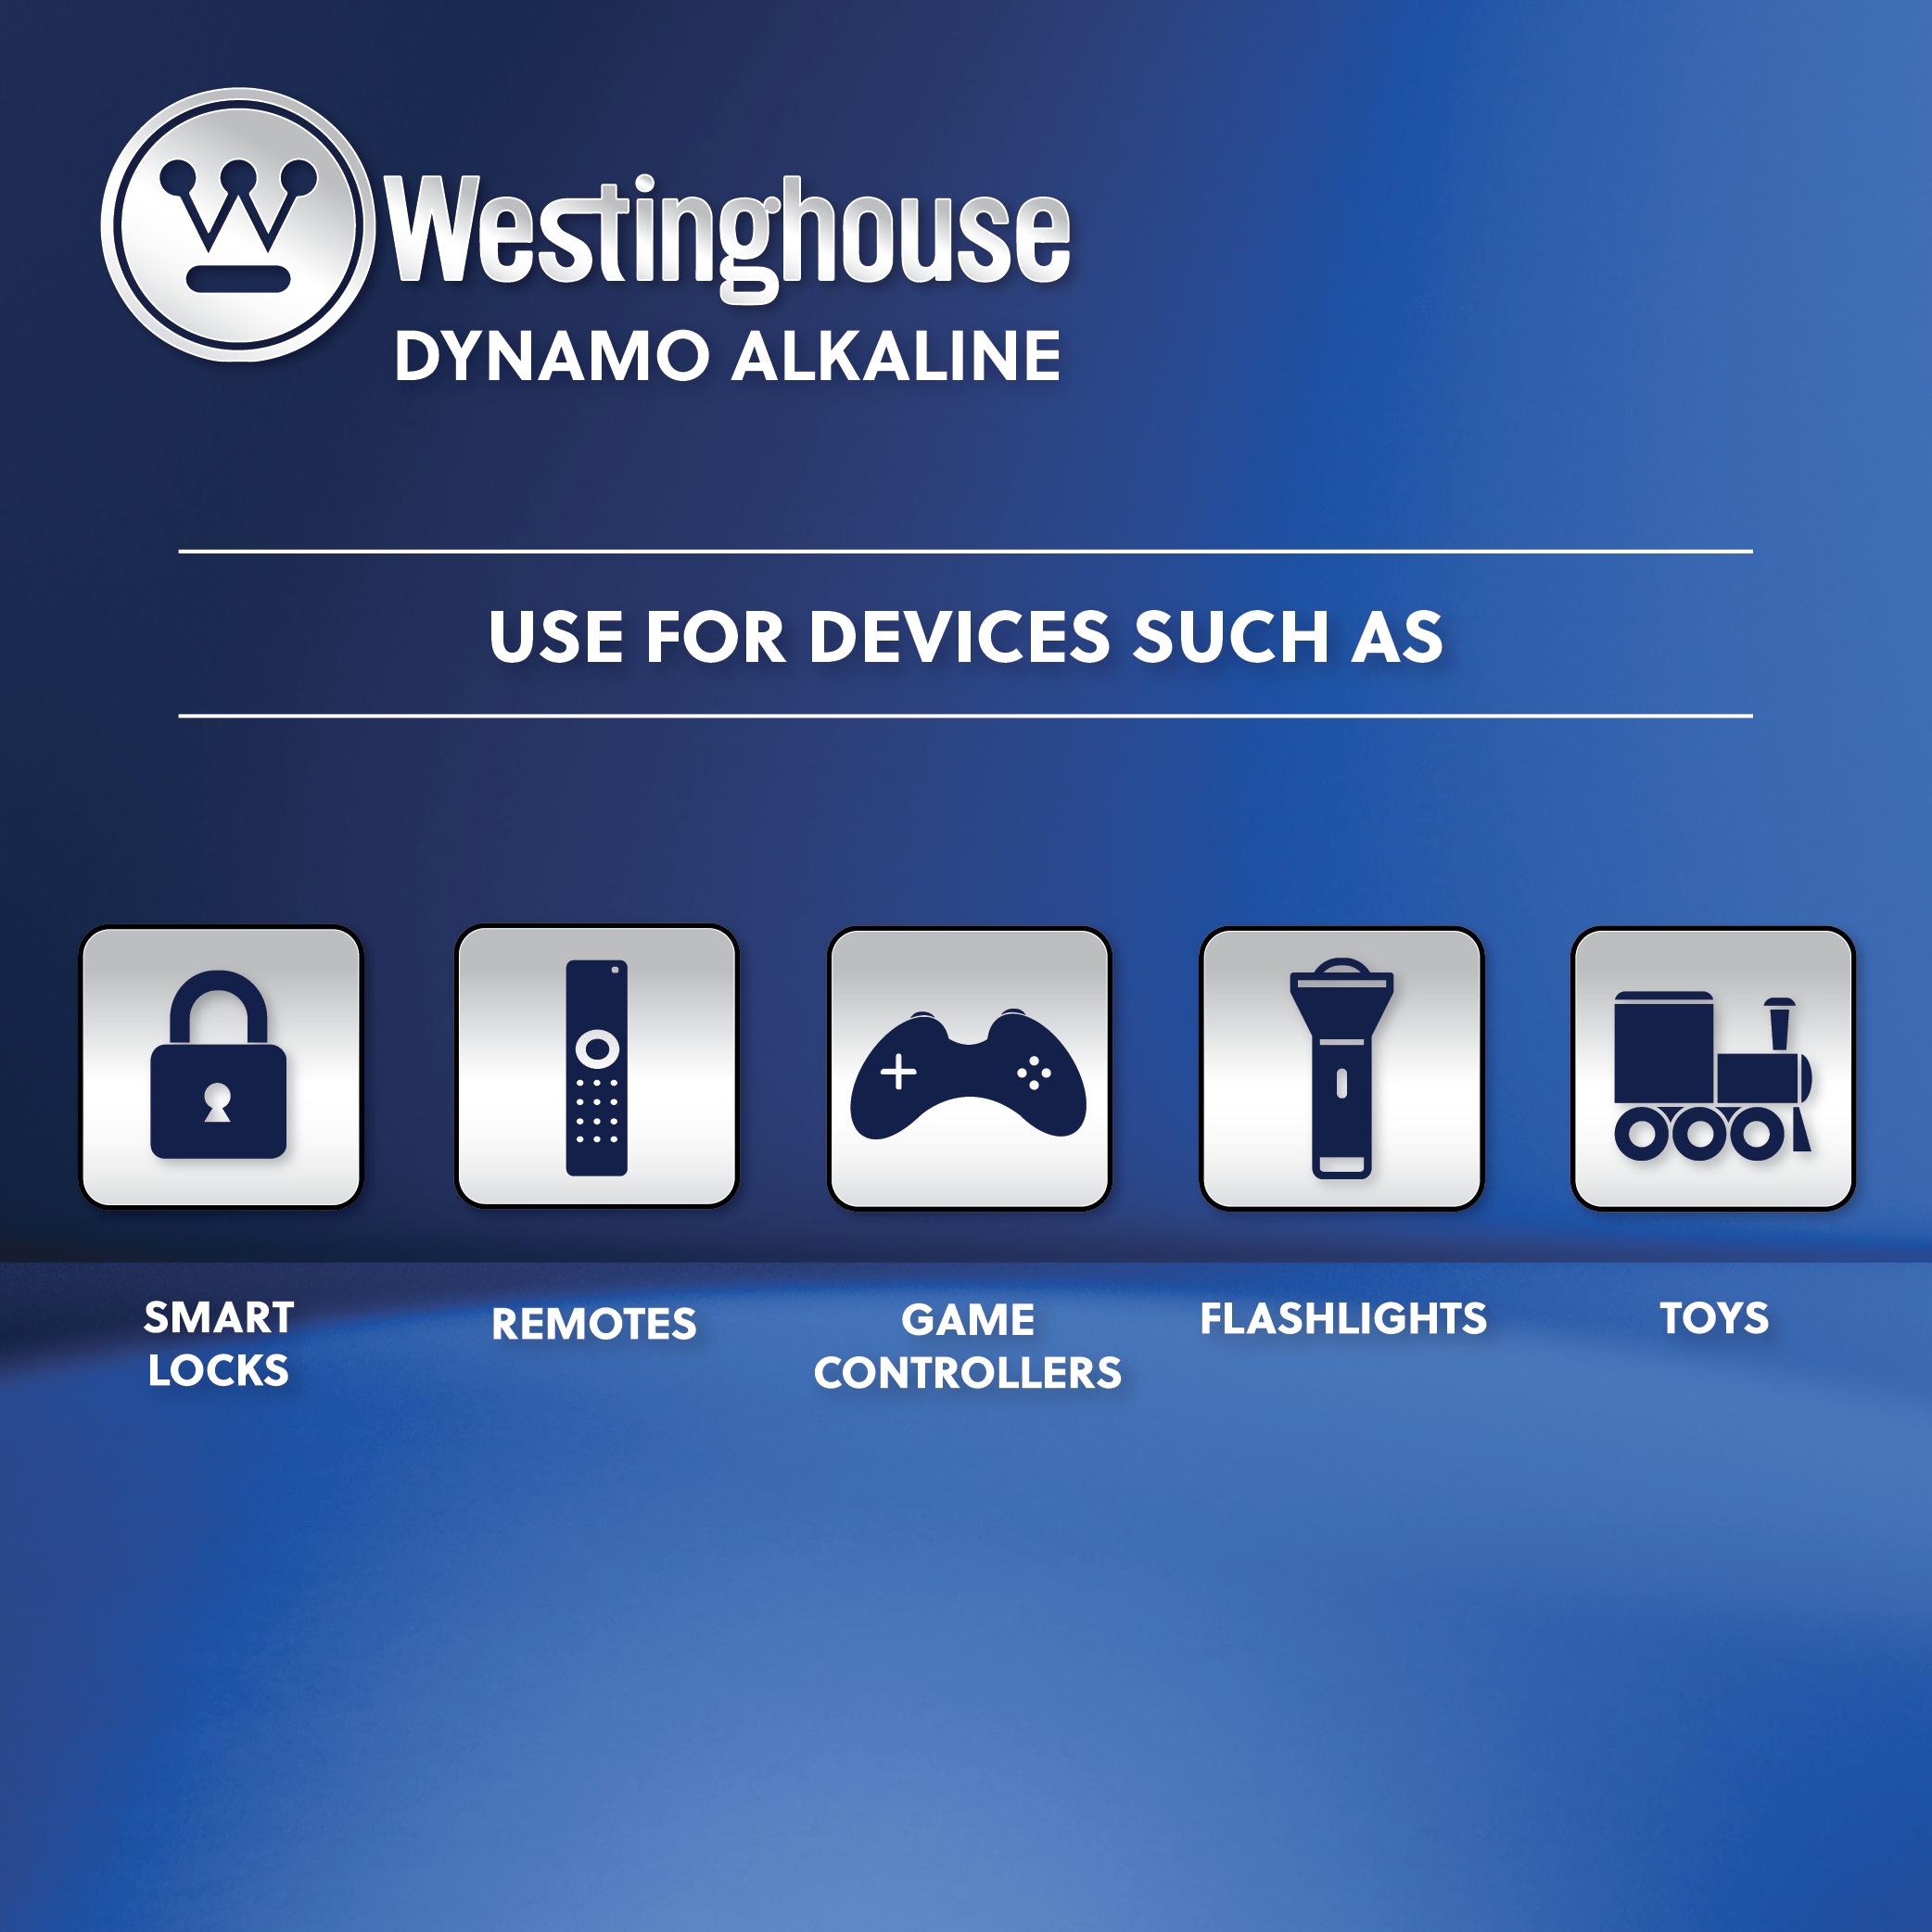 Westinghouse C Dynamo Alkaline Blister Pack of 2